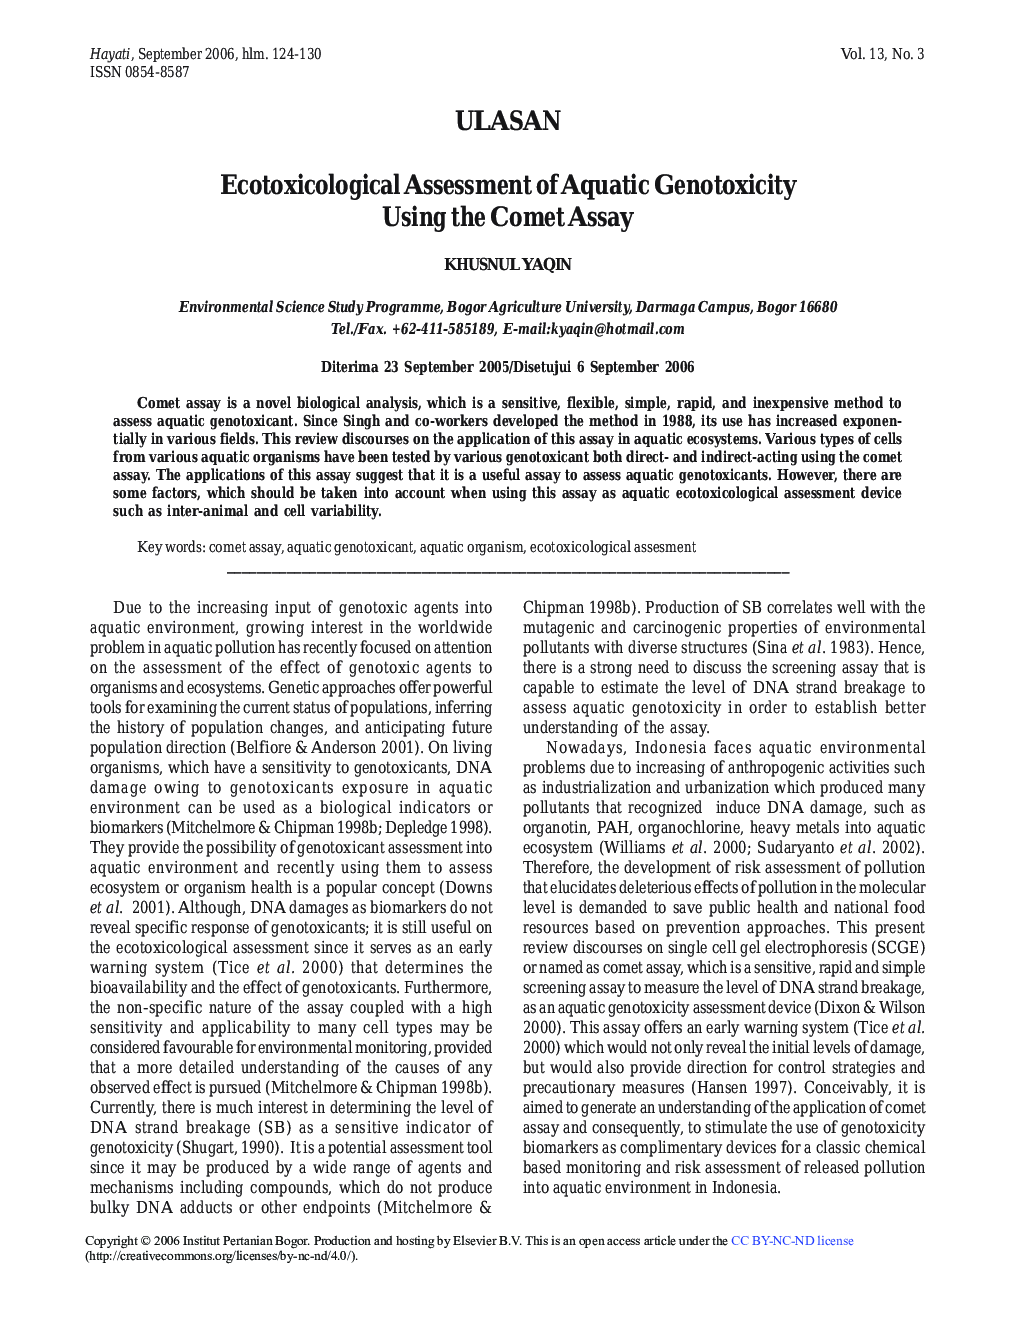 Ecotoxicological Assessment of Aquatic Genotoxicity Using the Comet Assay